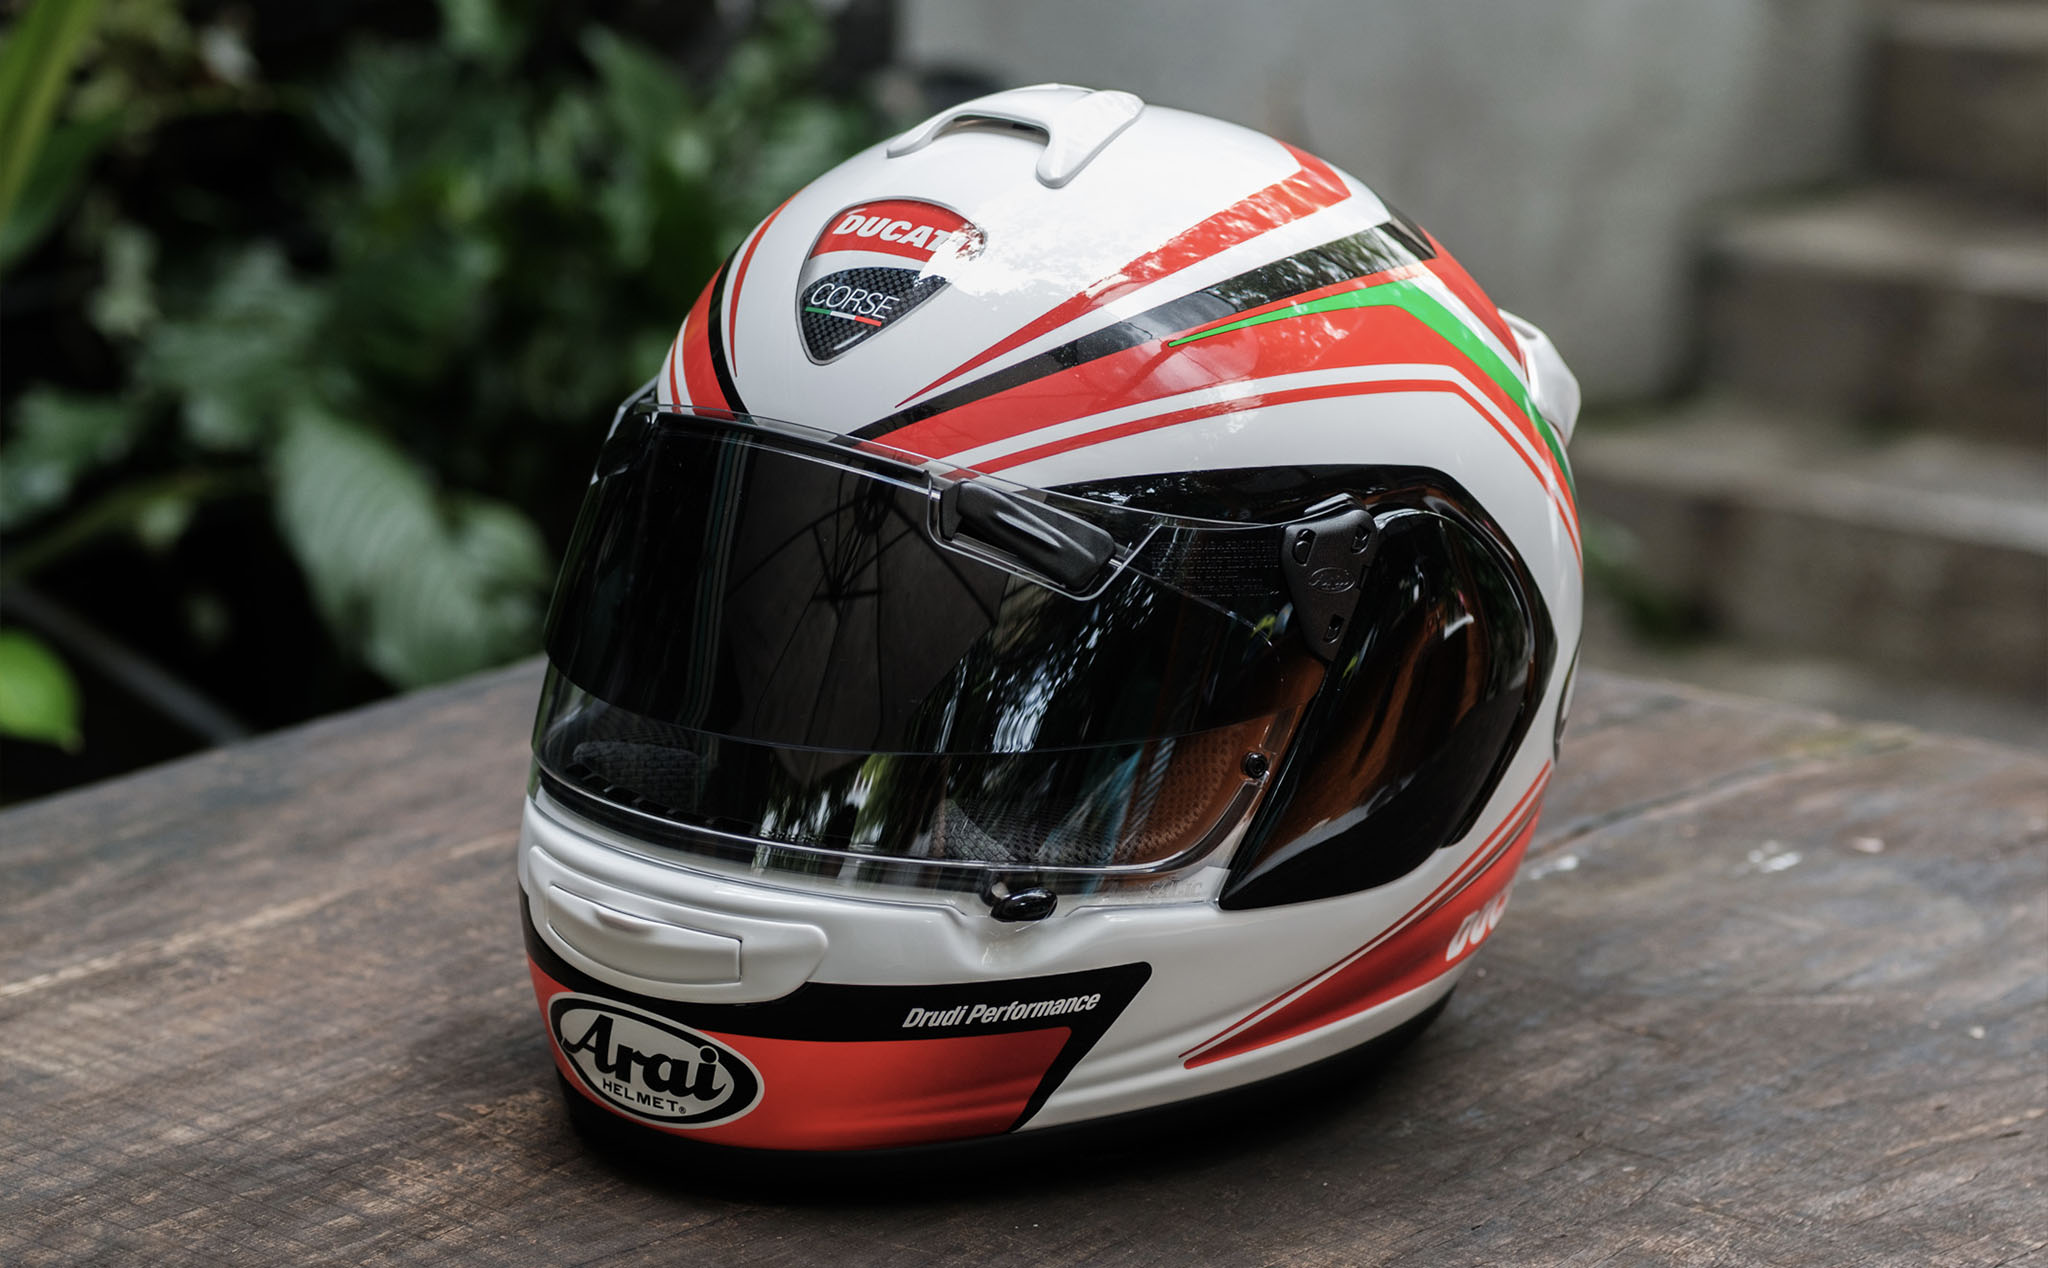 Trên tay fullface Ducati Corse Arai SBK 2: dành cho fan của Ducati